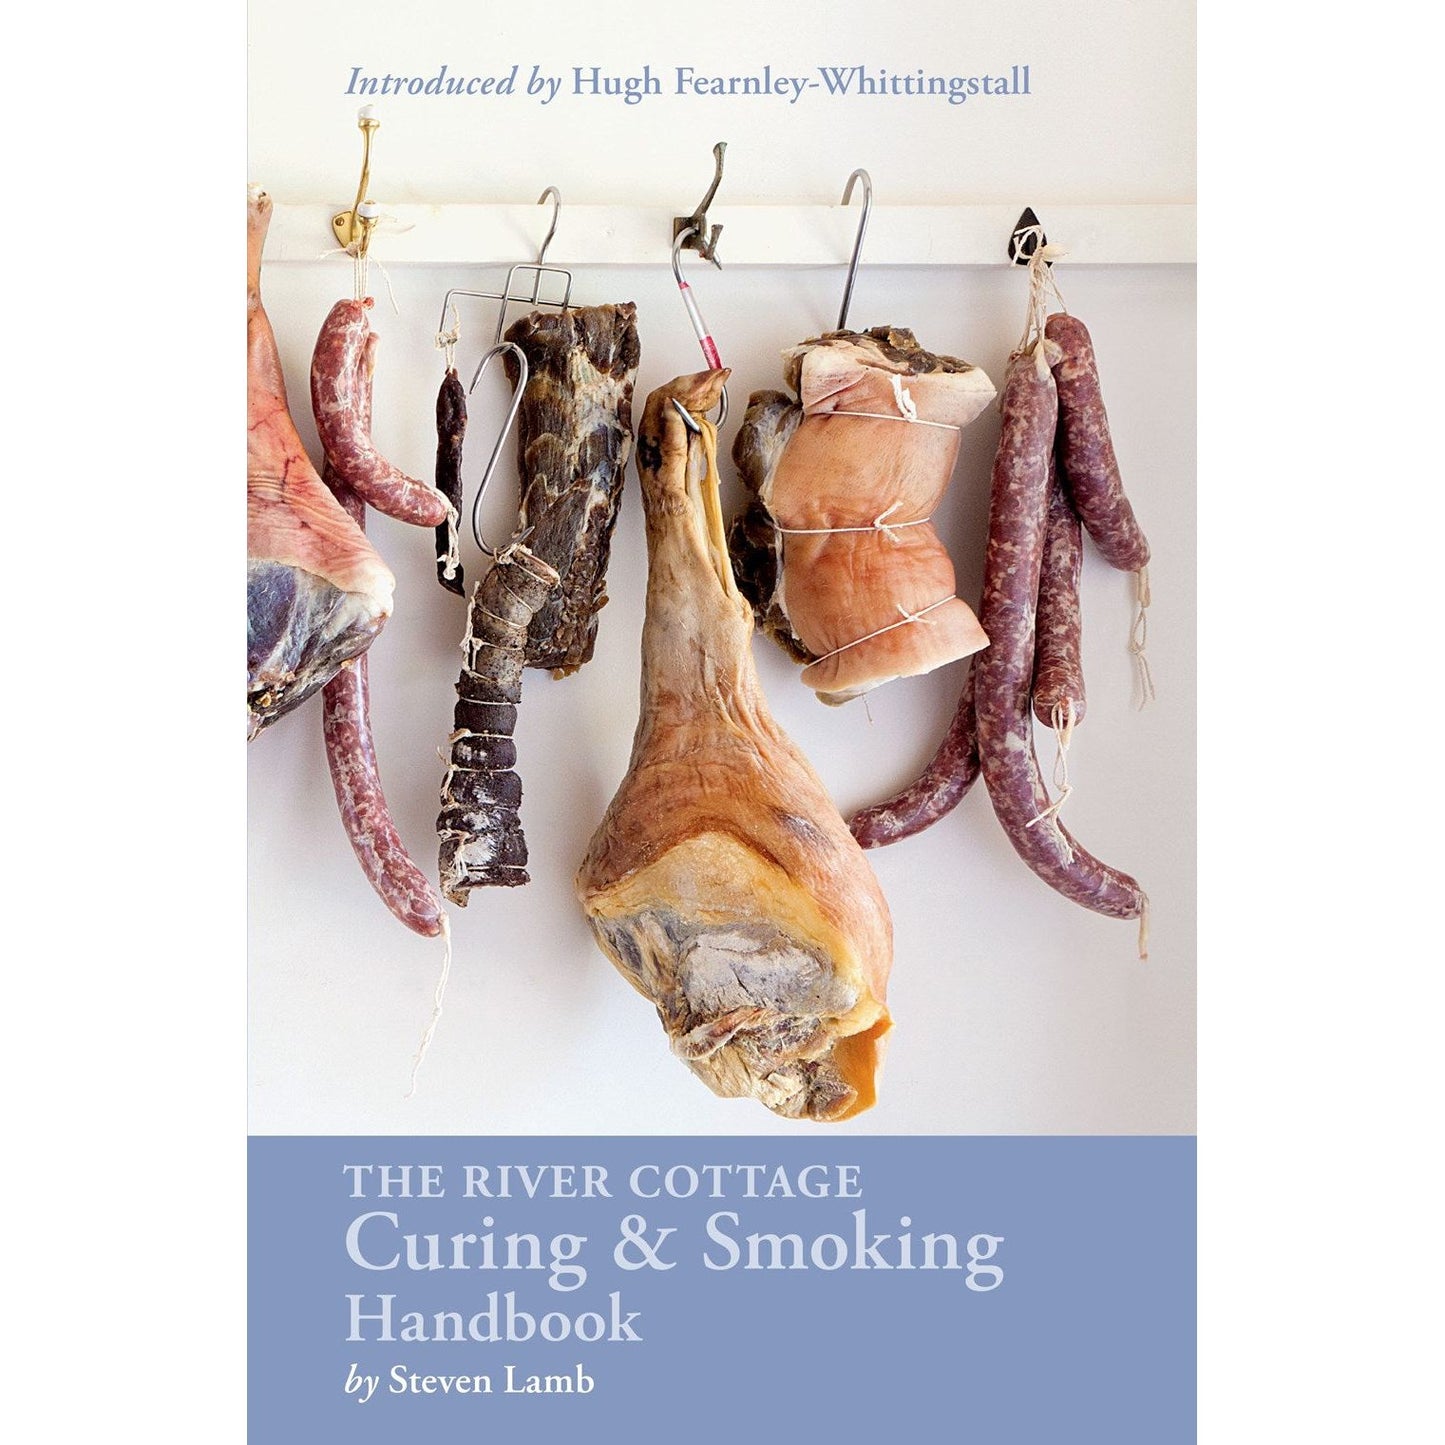 The River Cottage Curing & Smoking Handbook (Steven Lamb)